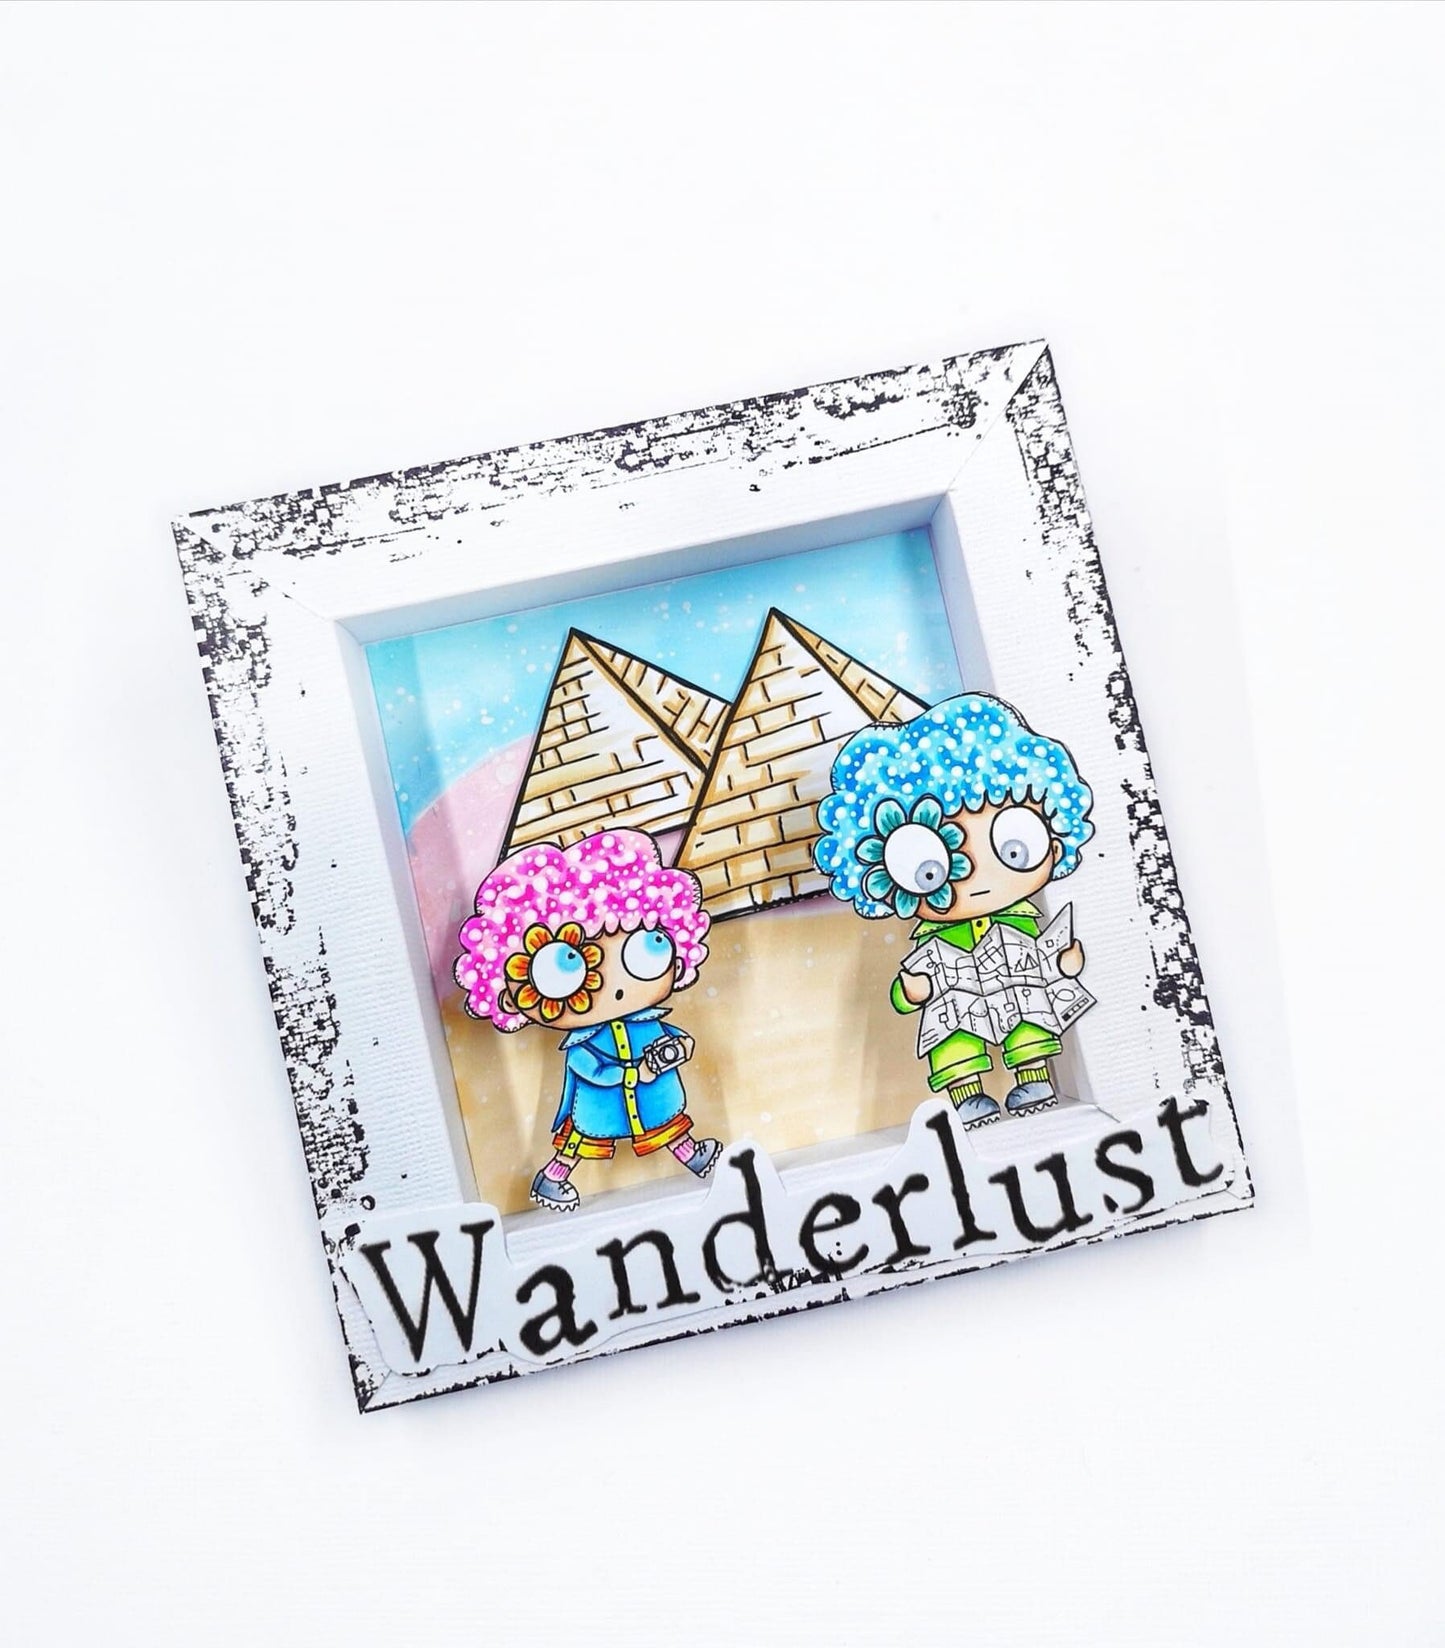 Wanderlust - 6 Digi stamps in jpg and png files